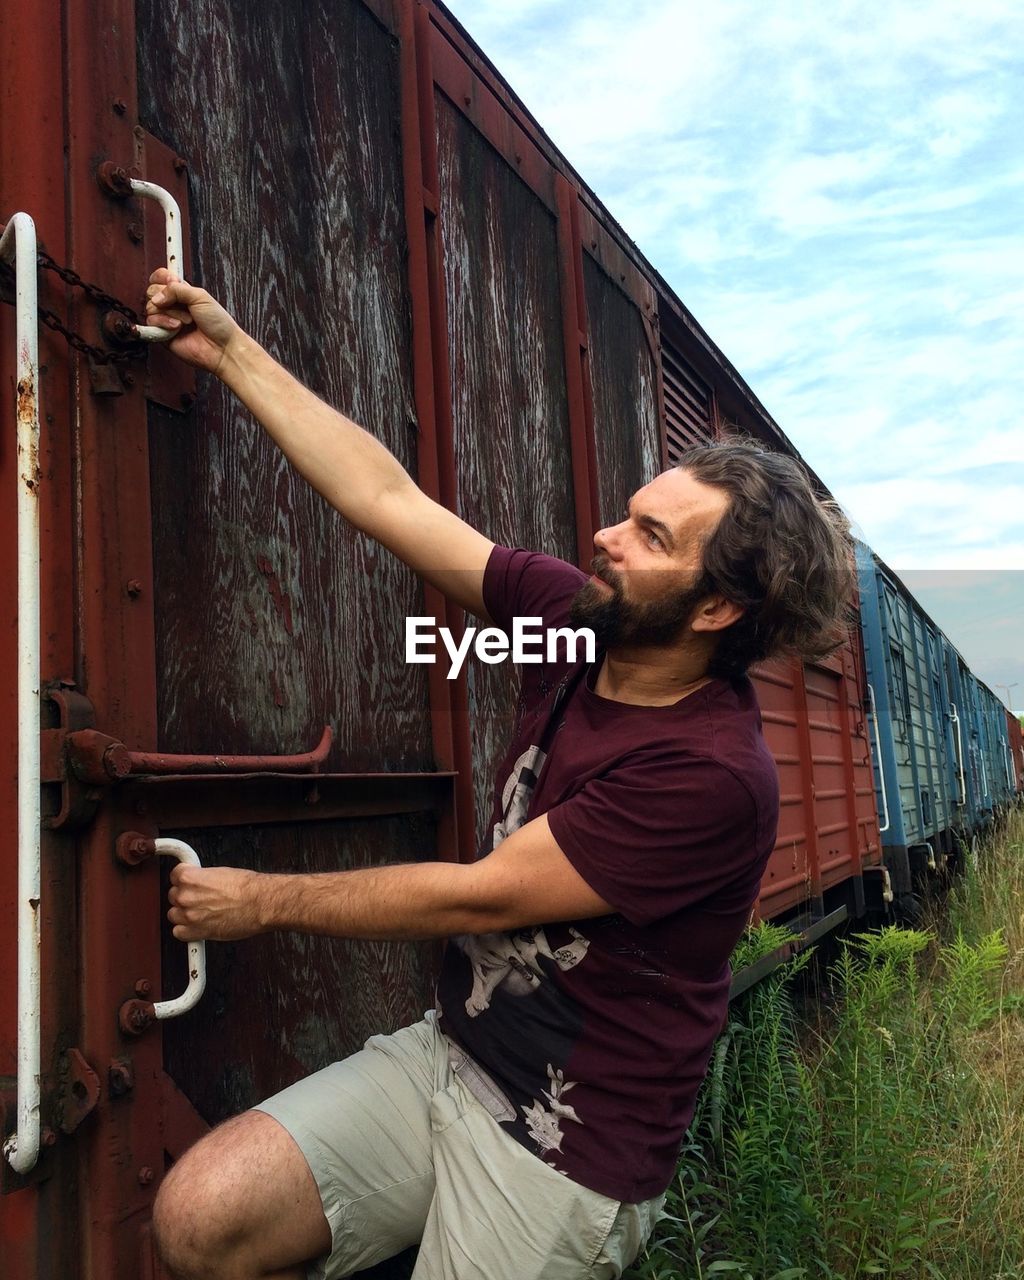 Bearded man hanging on train